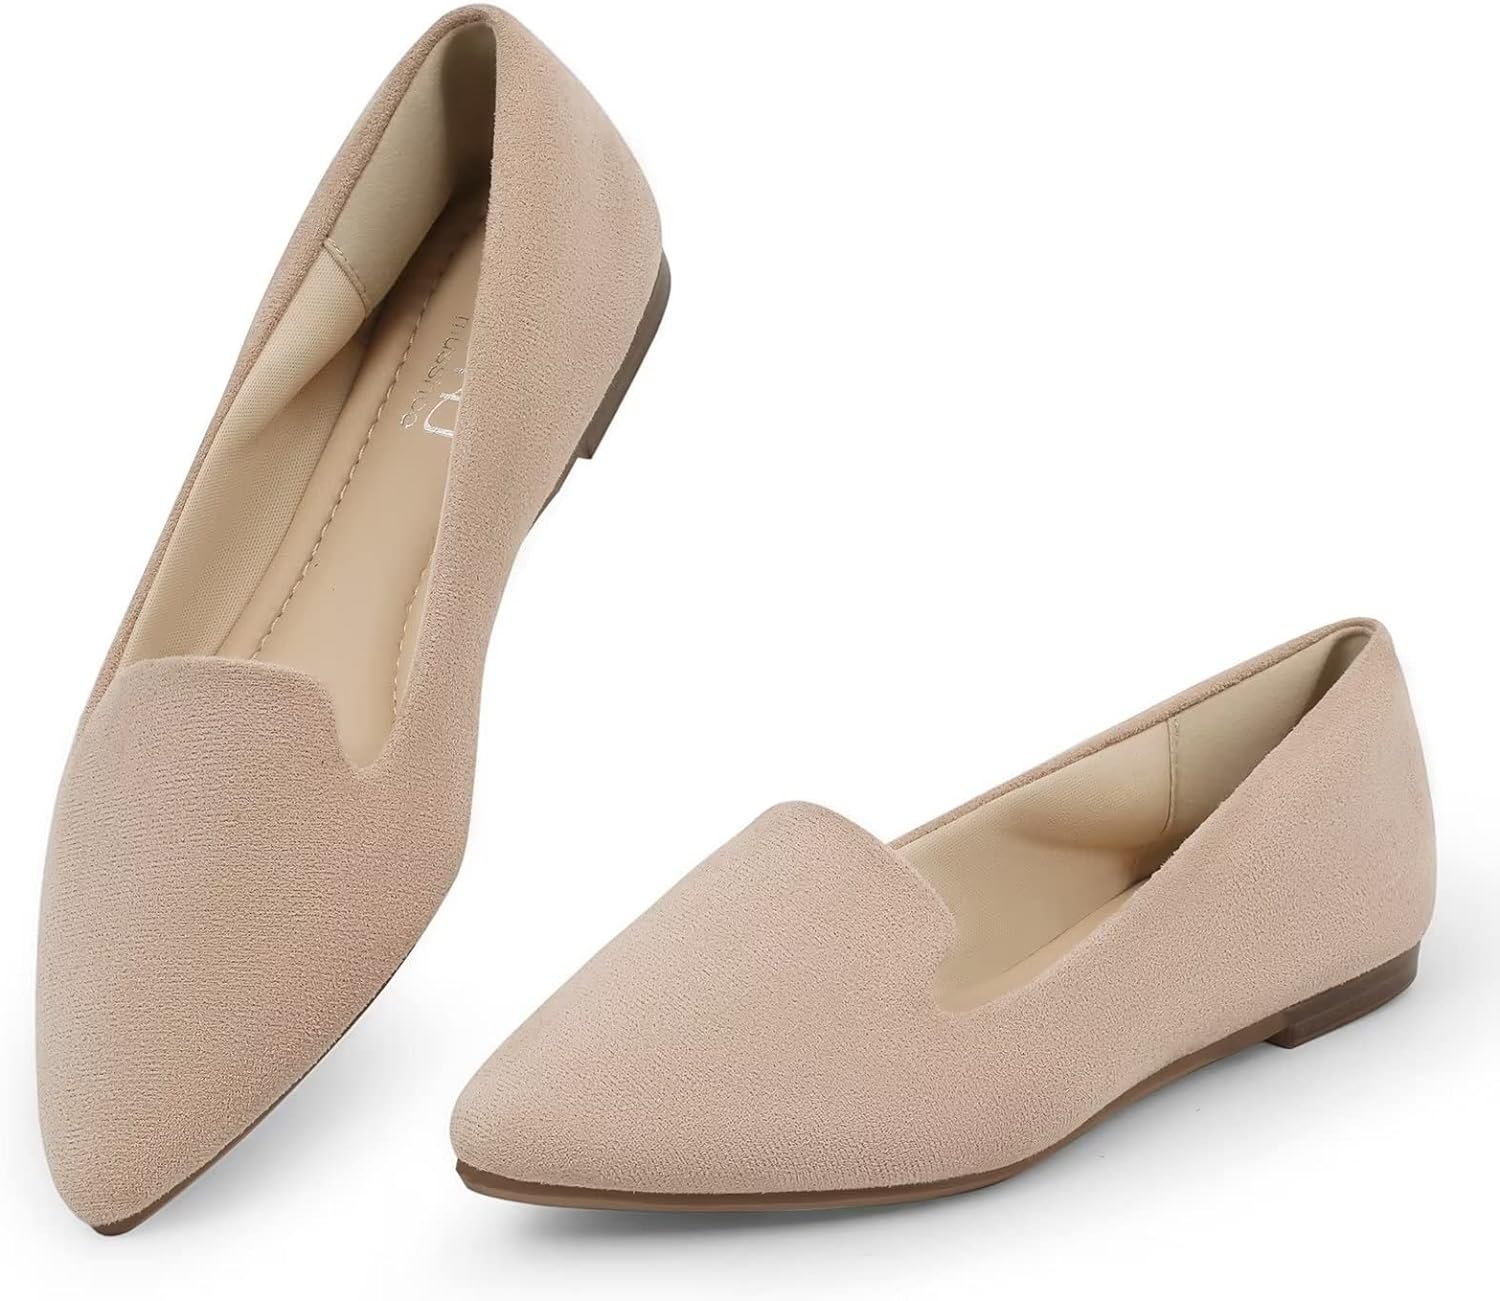 MUSSHOE Flat Shoes Women Comfortable Slip on Womens Flats